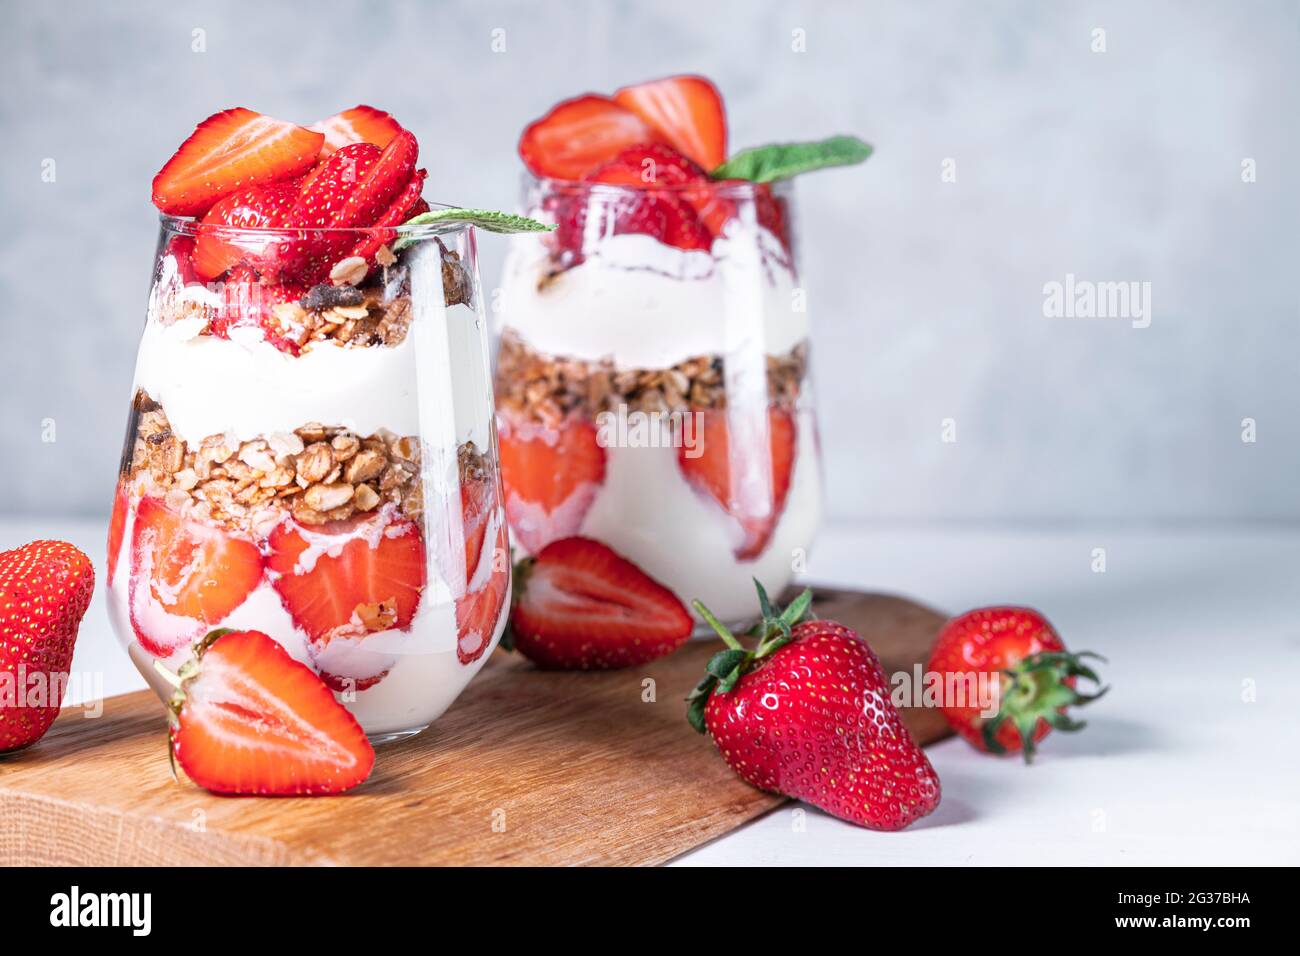 Healthy breakfast of strawberry parfaits made with fresh strawberry, yogurt and muesli in glasses. Stock Photo